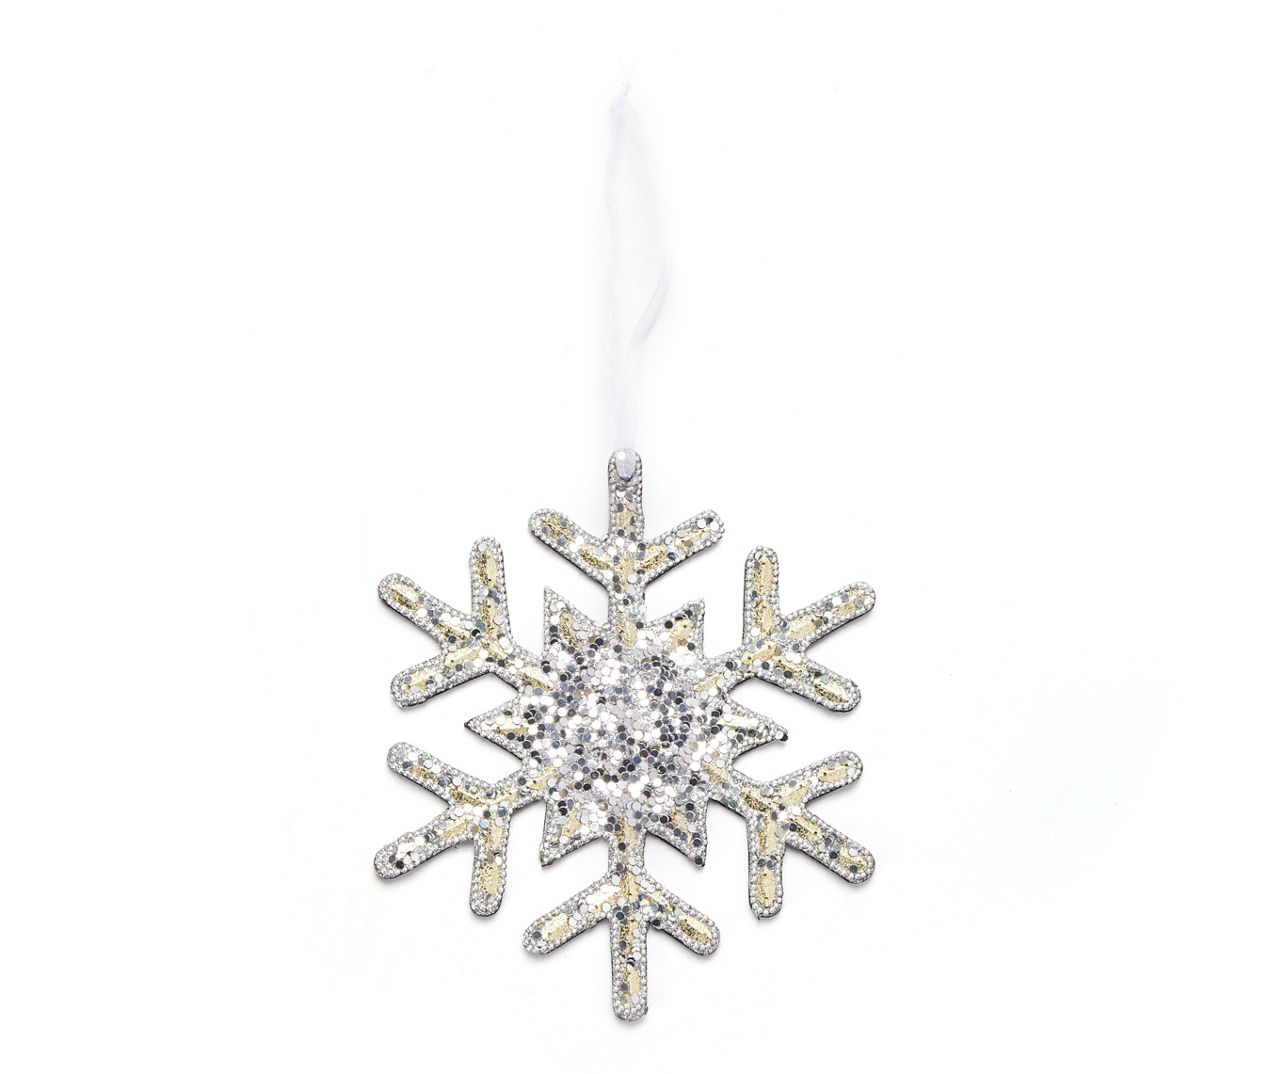 Winter Wonder Lane Silver Glitter Snowflakes Mini Ornaments, 9-Pack